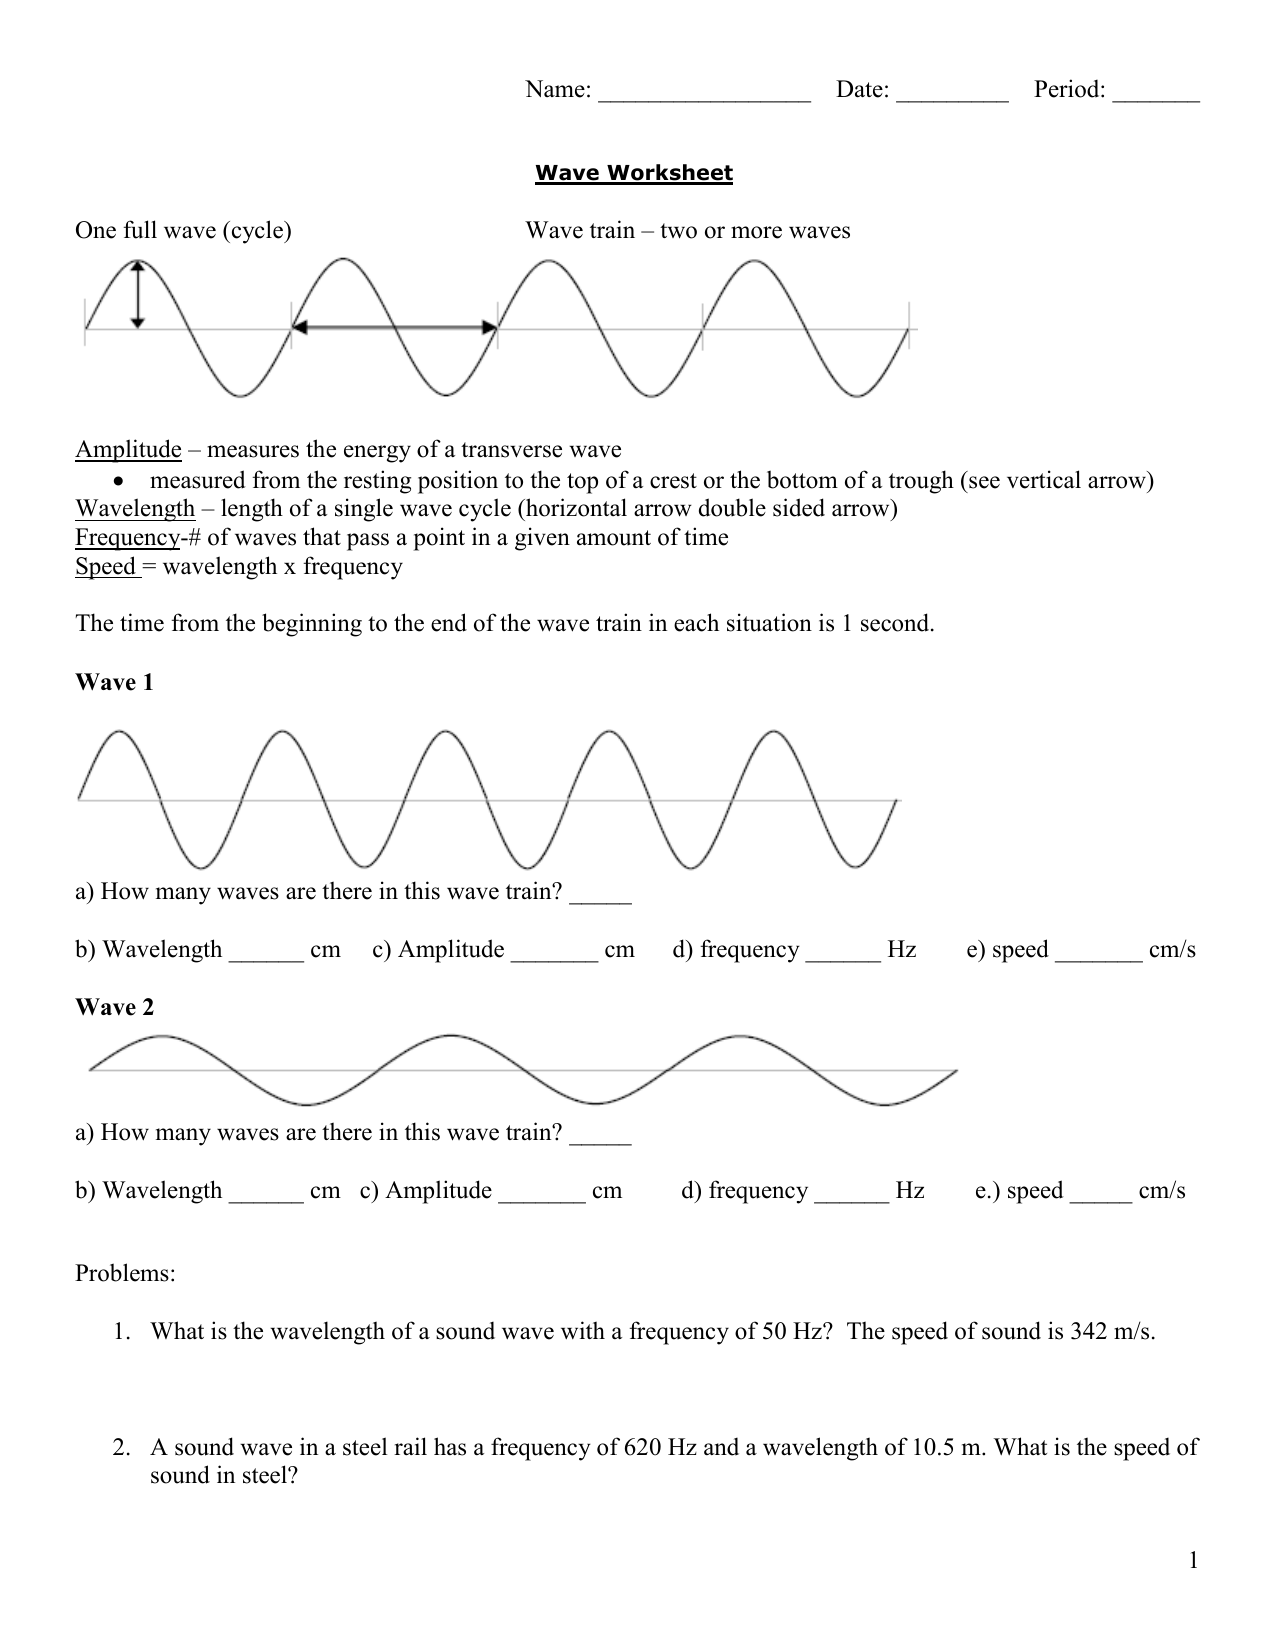 waves-and-sound-worksheet-pdf-sound-waves-worksheet-alu-ban-academia